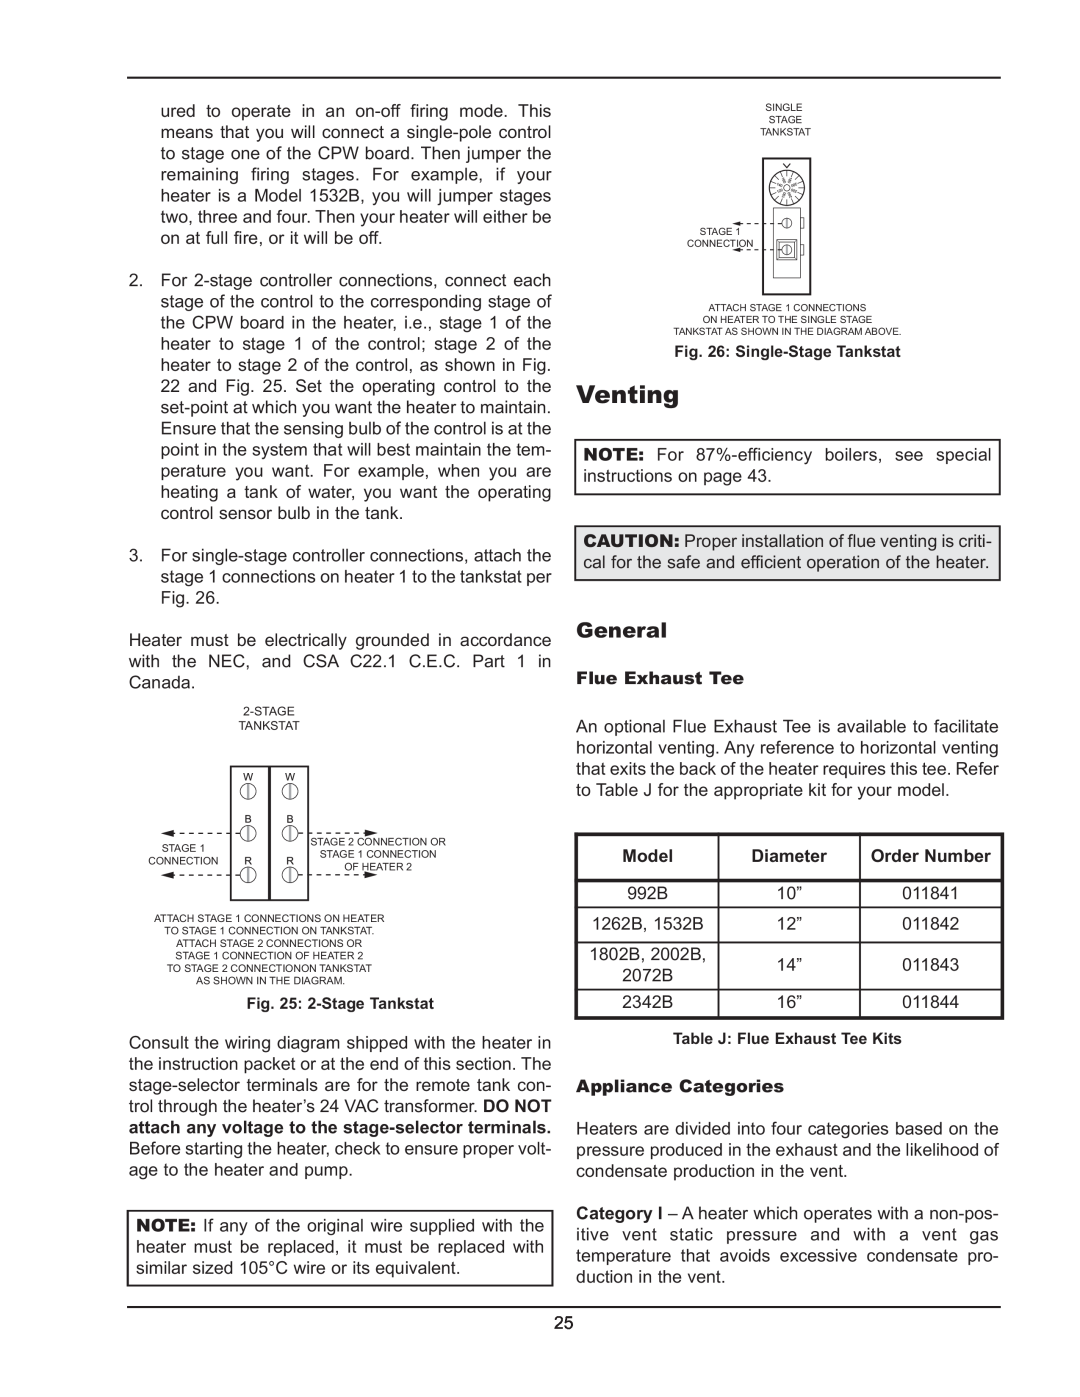 Raypak 992B-1262B manual Venting, Flue Exhaust Tee, Model, Diameter, Order Number, Appliance Categories 